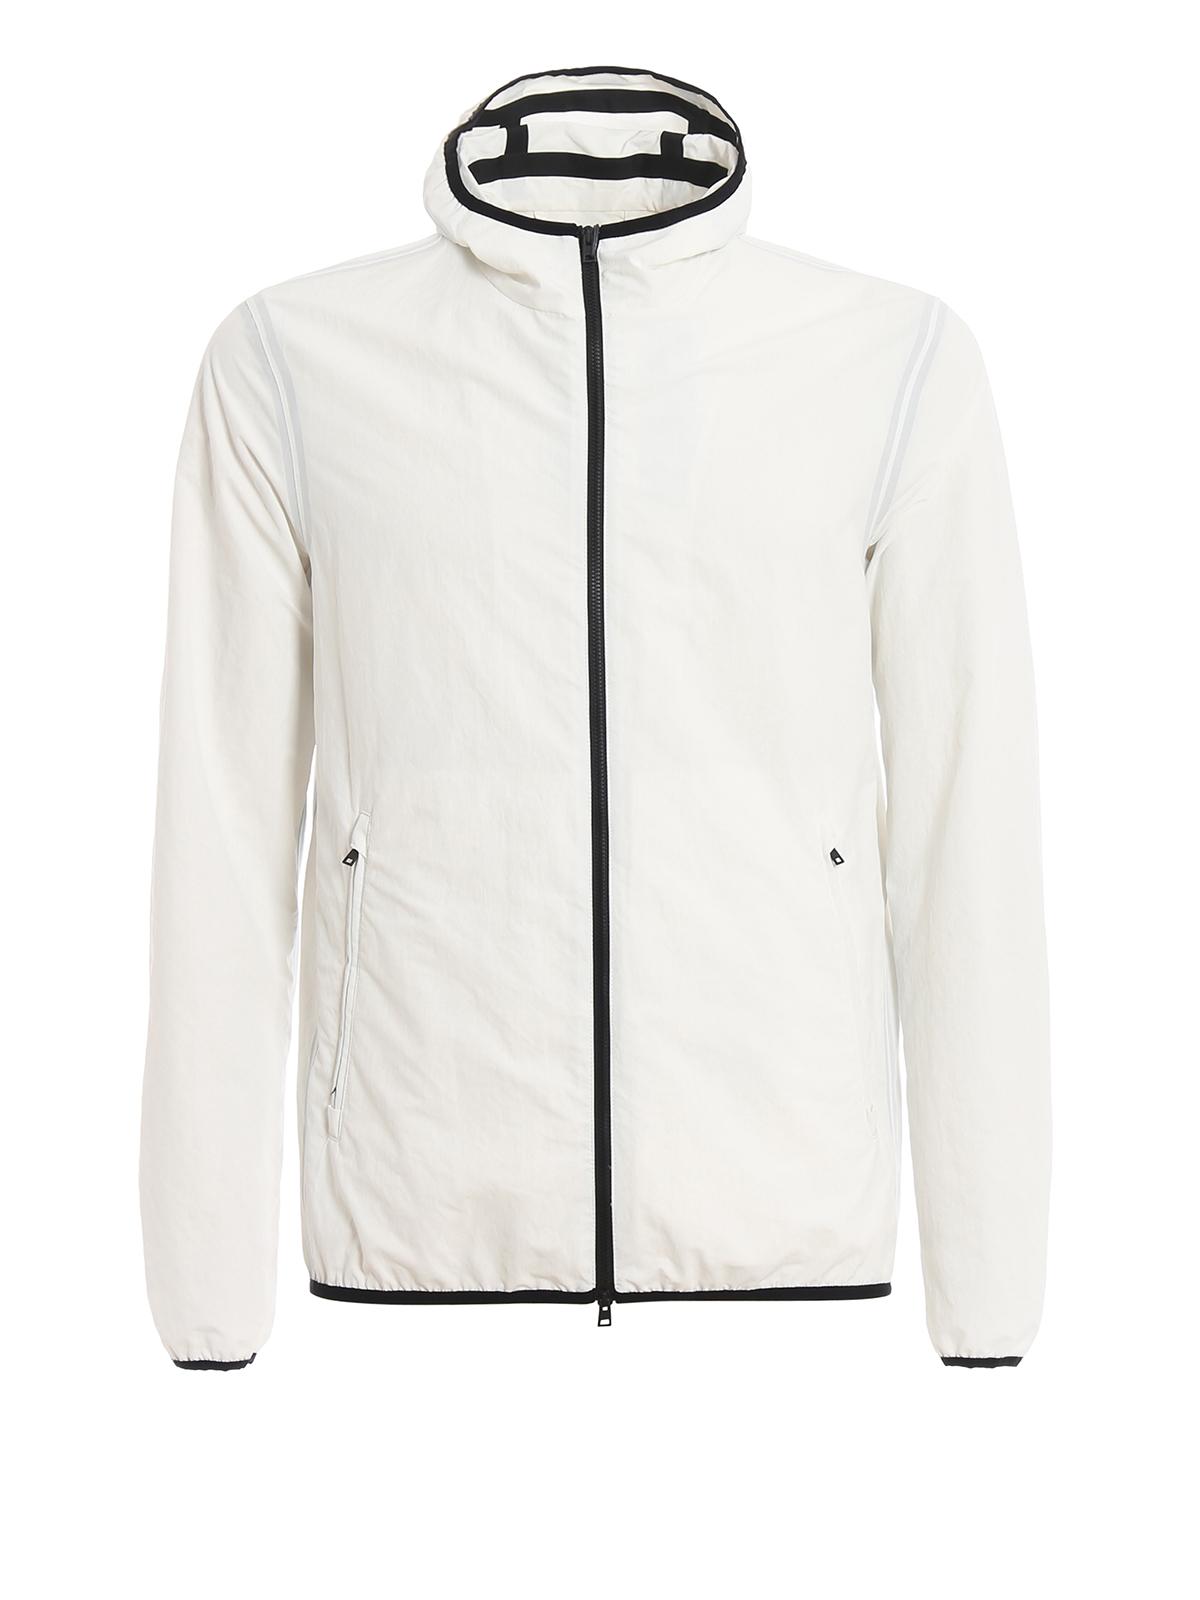 Herno Matte Plaster Tech Fabric Hooded Jacket in White for Men - Lyst